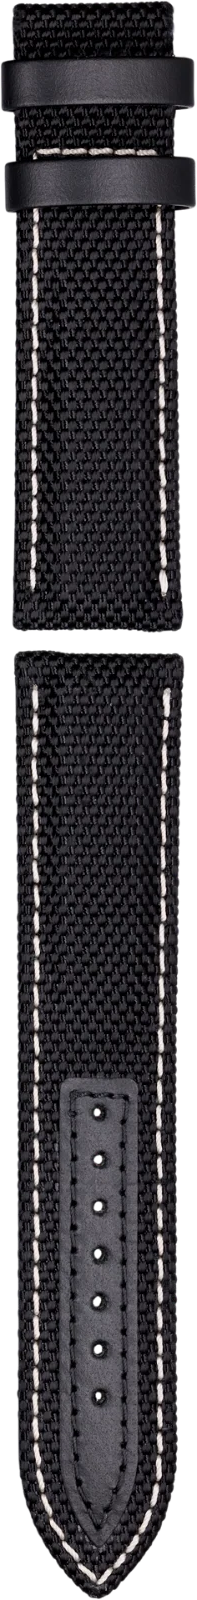 Union Glashütte Textil-Armband schwarz, Naht weiß